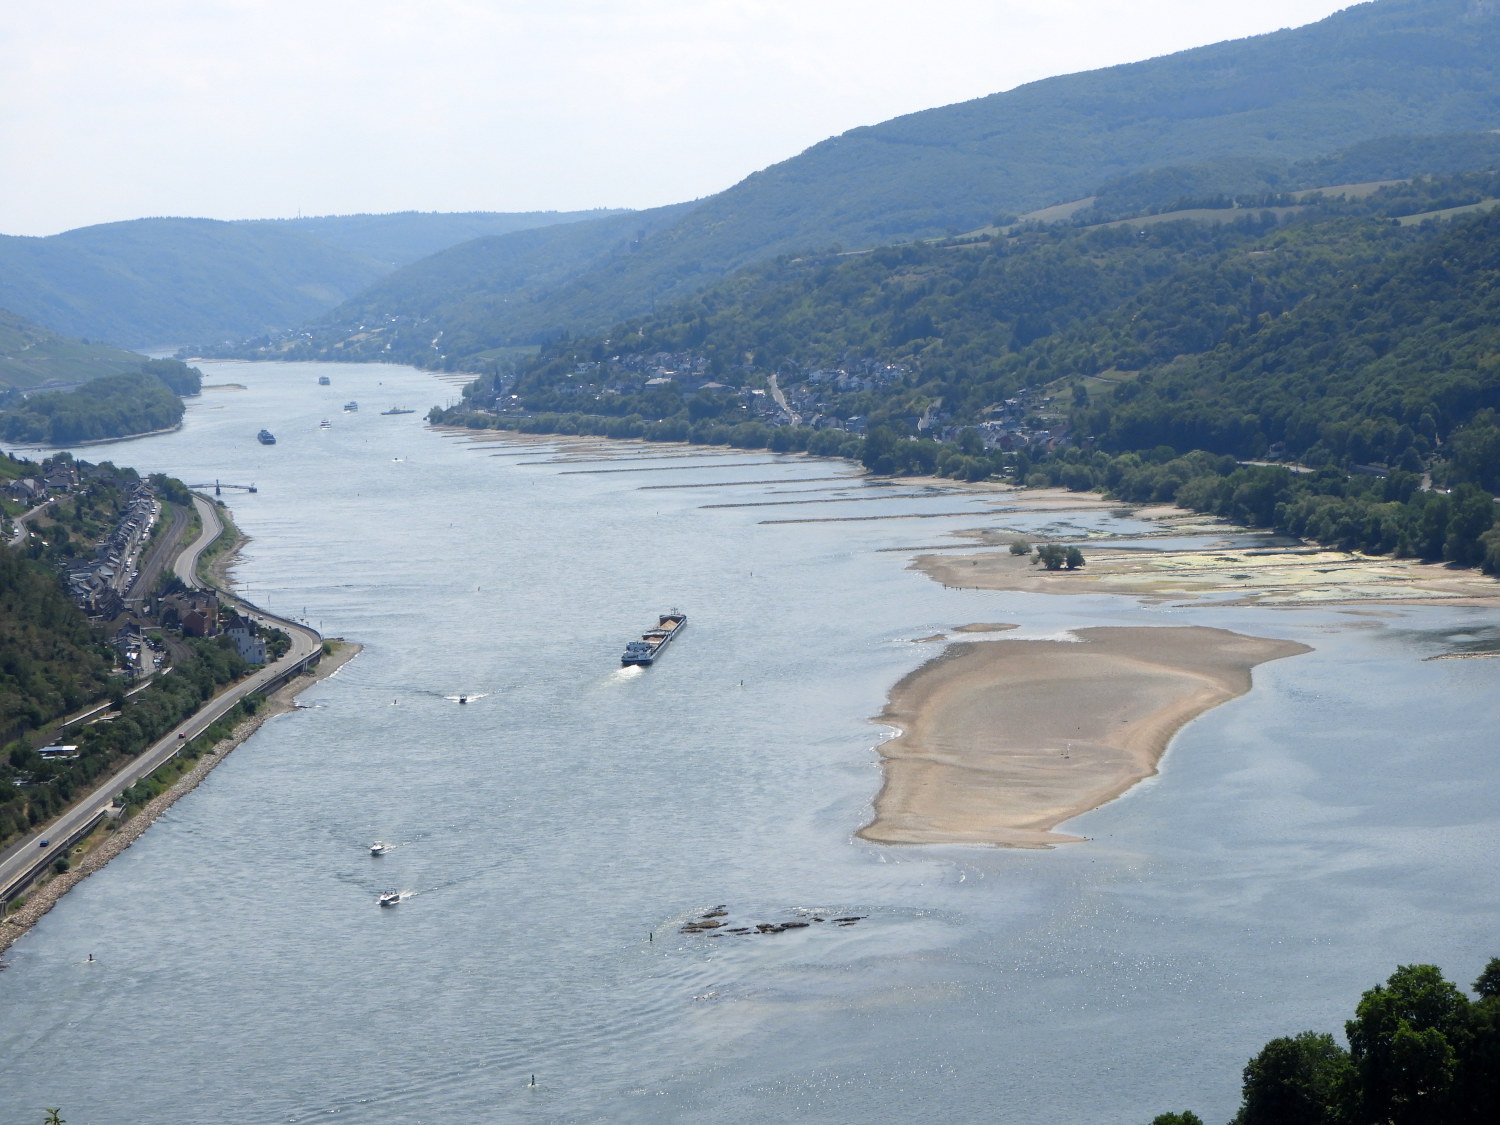 Sandbanks in the Rhine